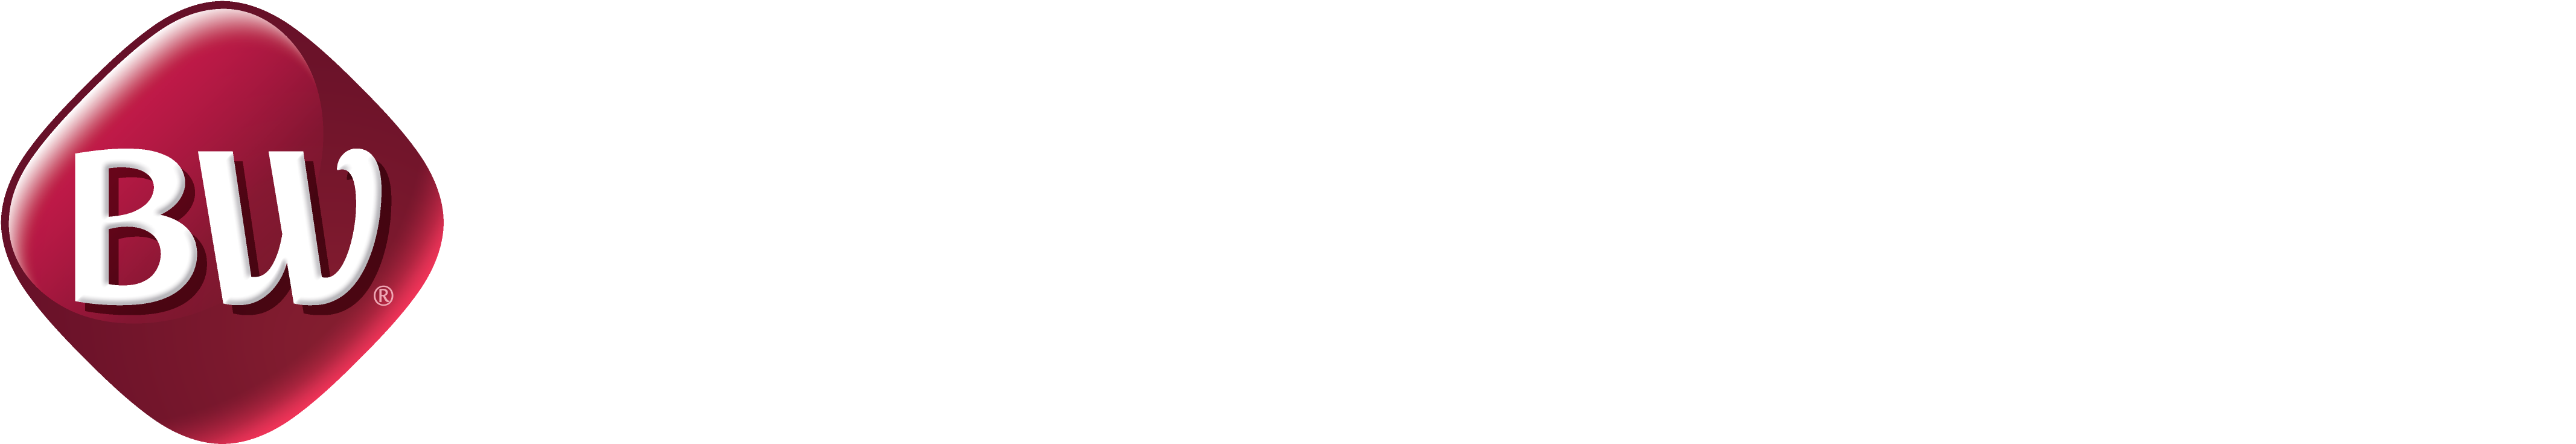 Best Western Plus - Best Western (4453x970), Png Download